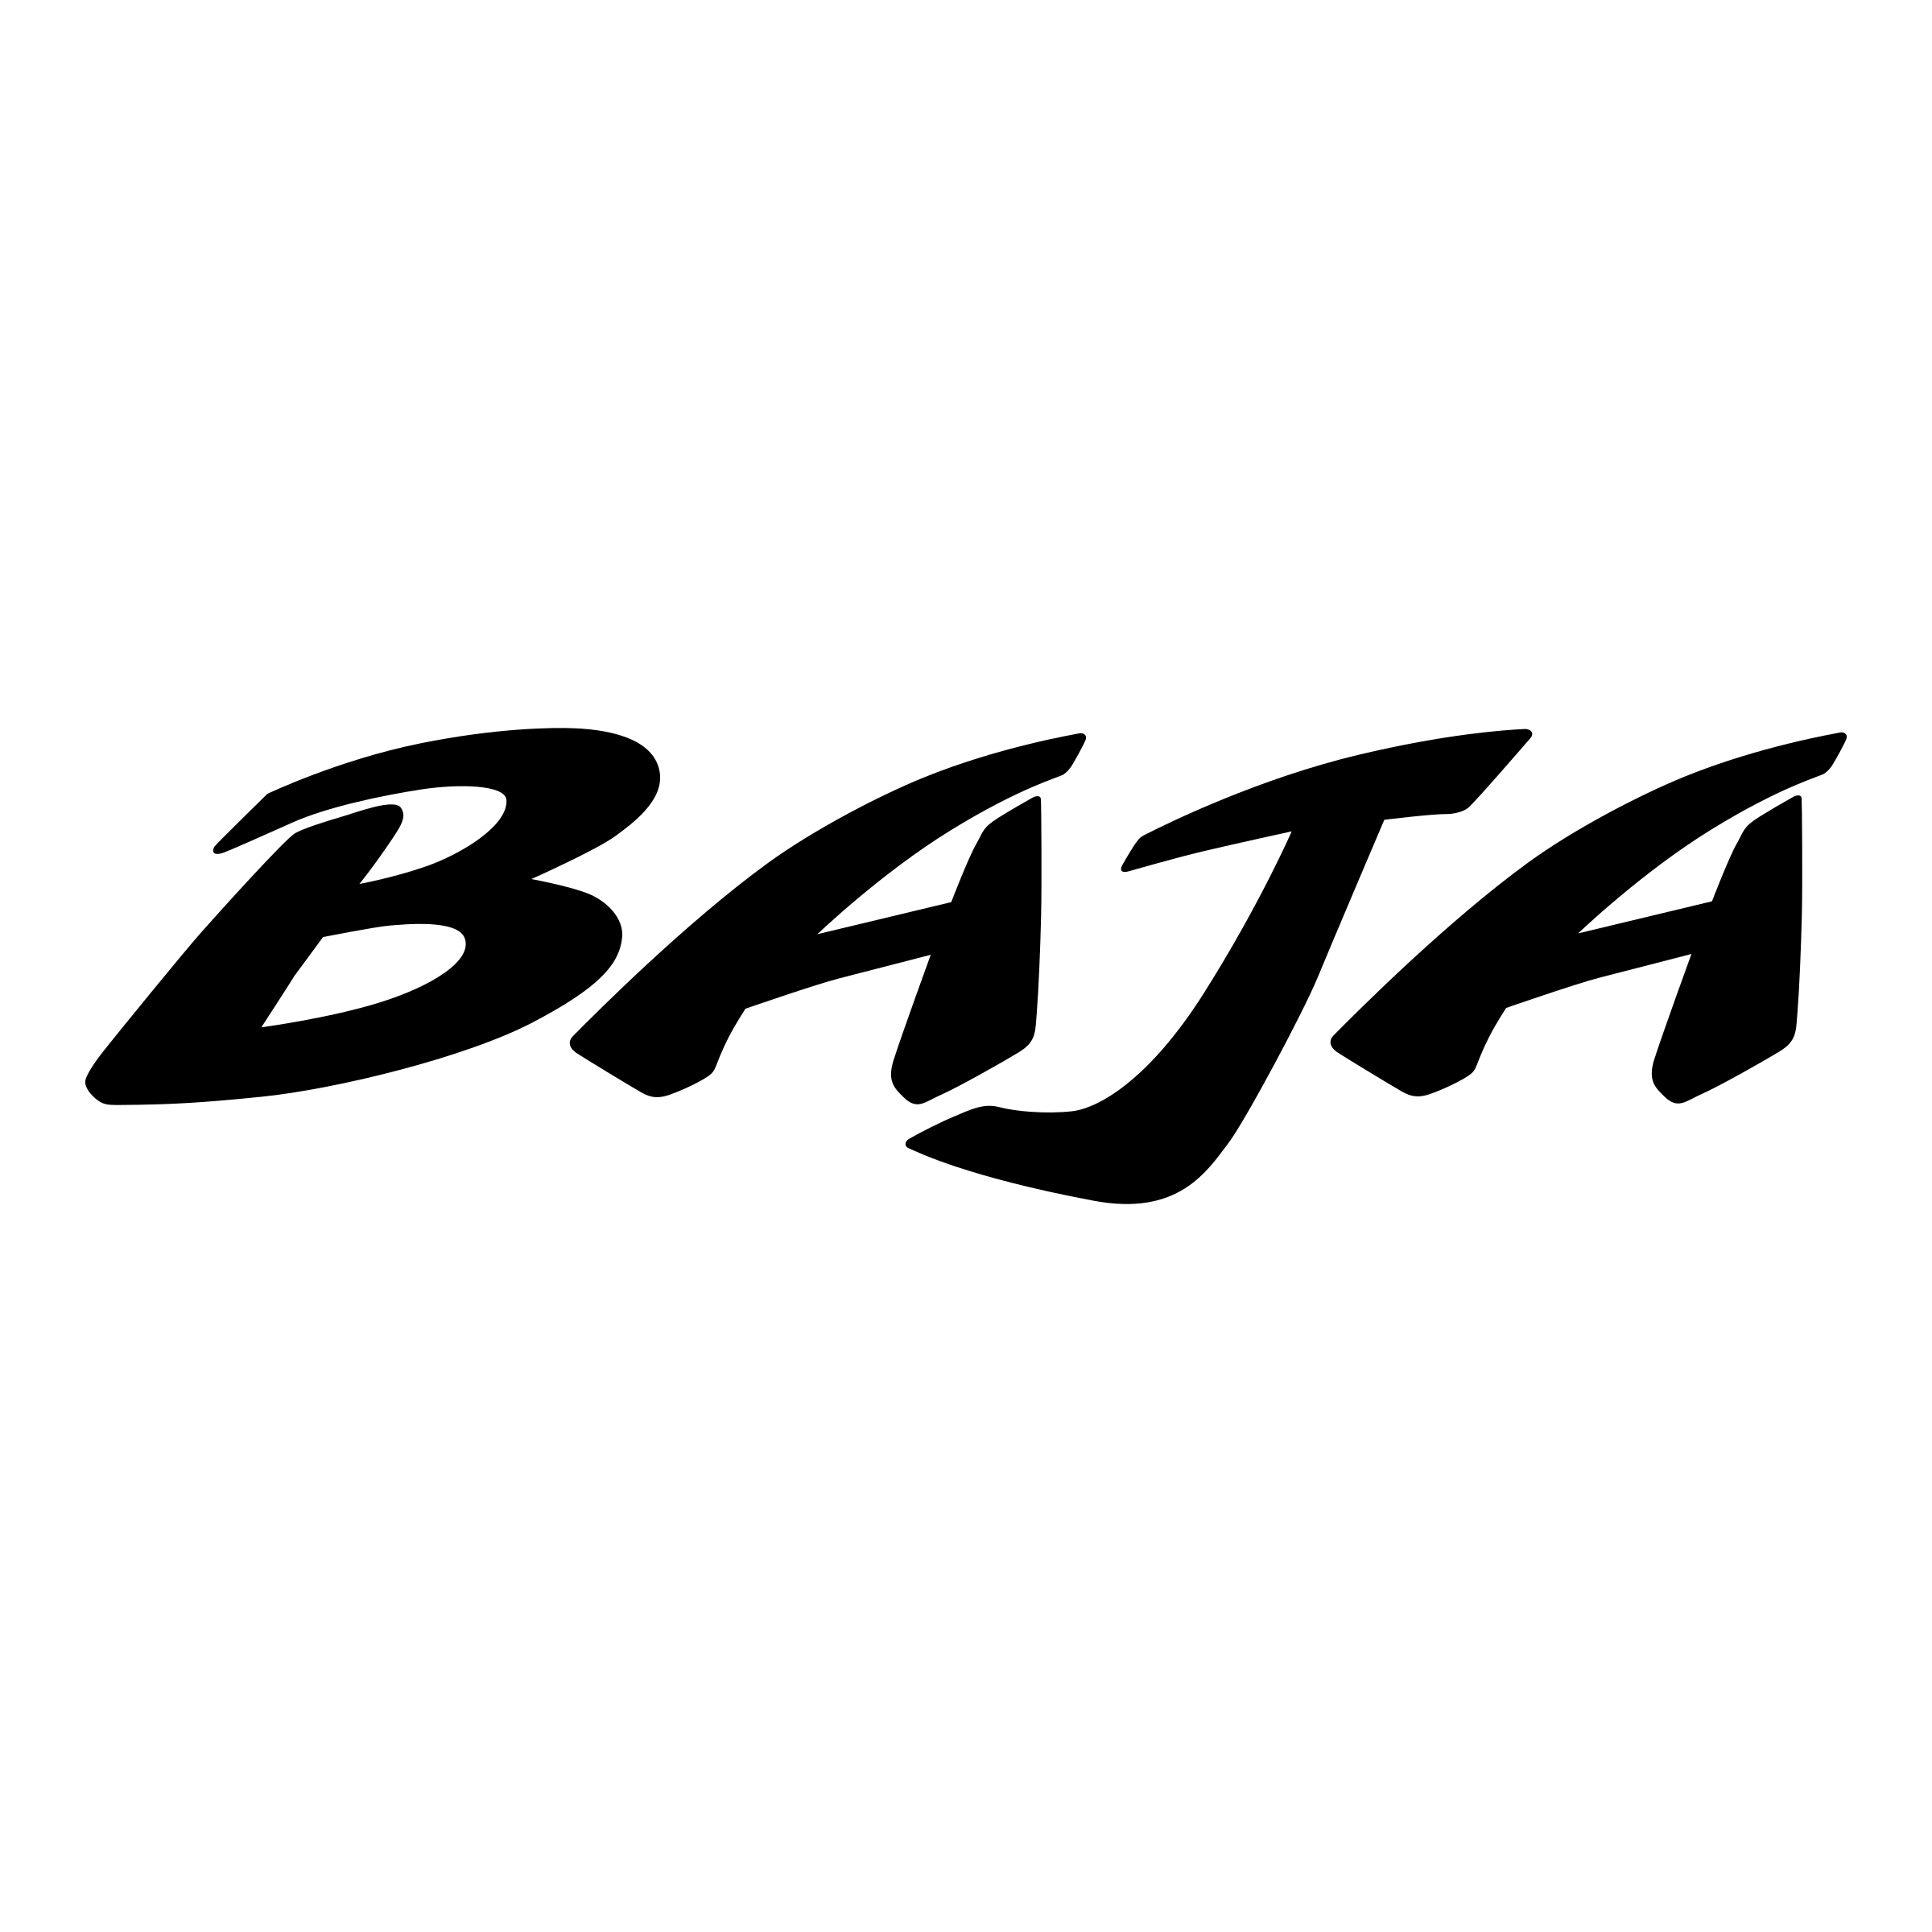 Baja Logo - Baja Logo PNG Transparent & SVG Vector - Freebie Supply